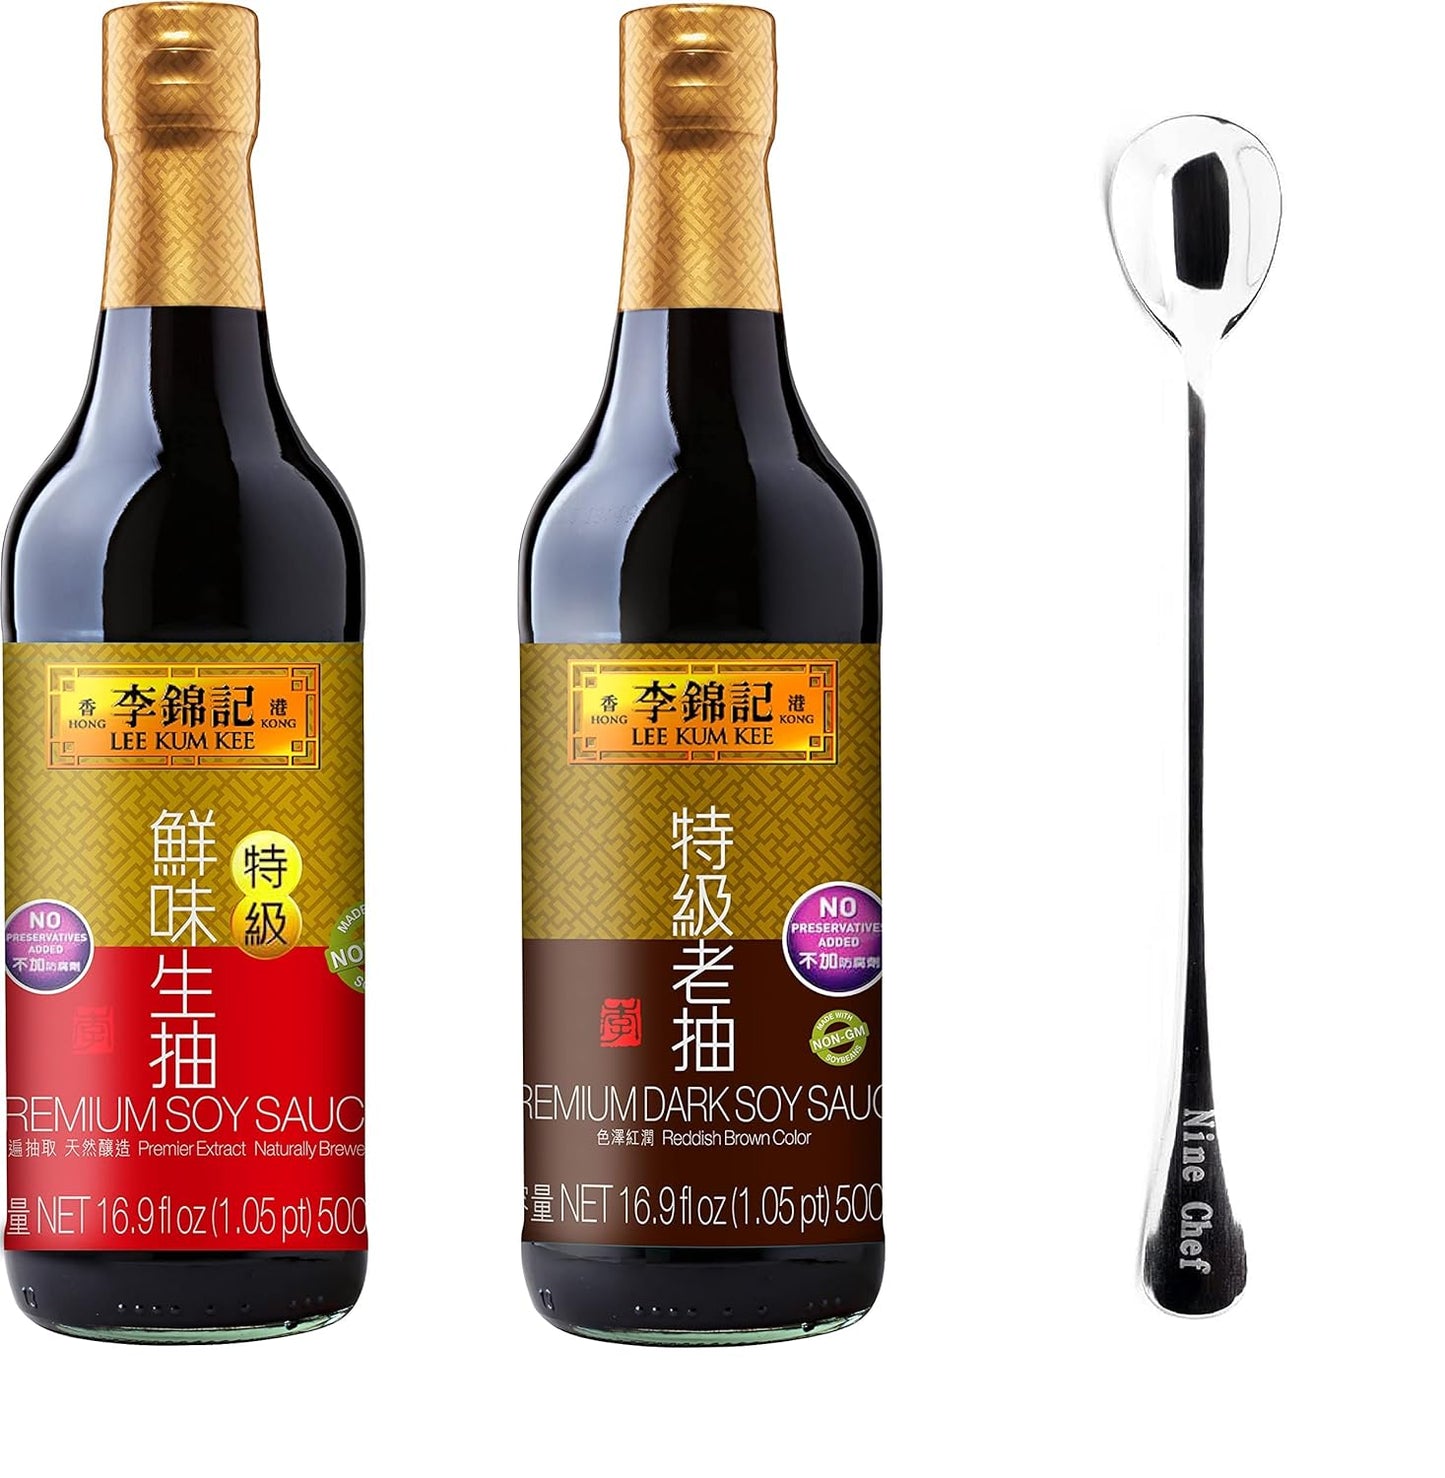 Lee Kum Kee Premium Light Soy Sauce, 16.9-Ounce + Lee Kum Kee Premium Dark Soy Sauce - 16.9 fl. Ounce + One NineChef Spoon